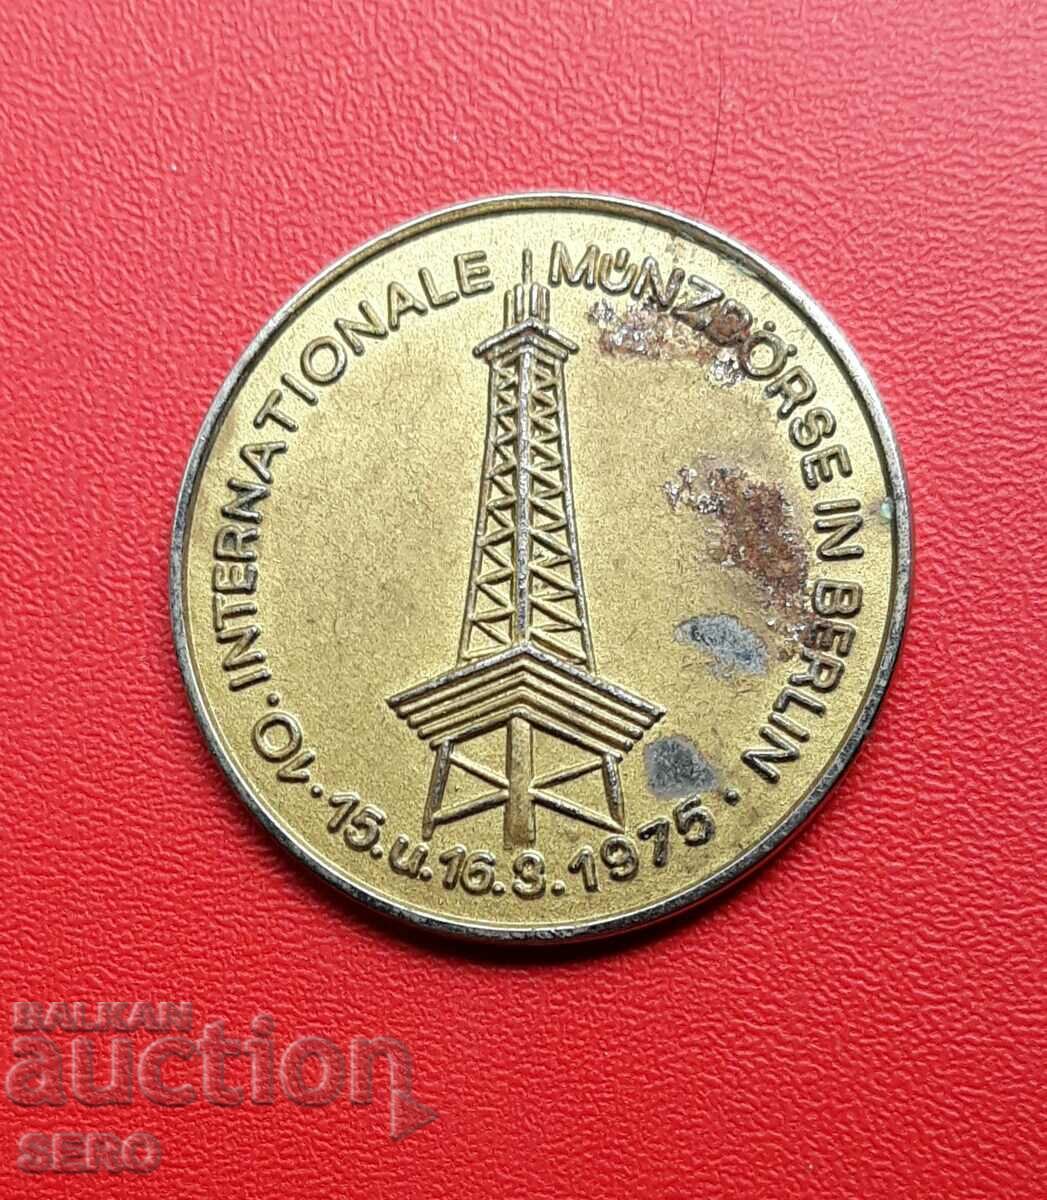 Germany-Berlin-10 International Coin Exchange 1975